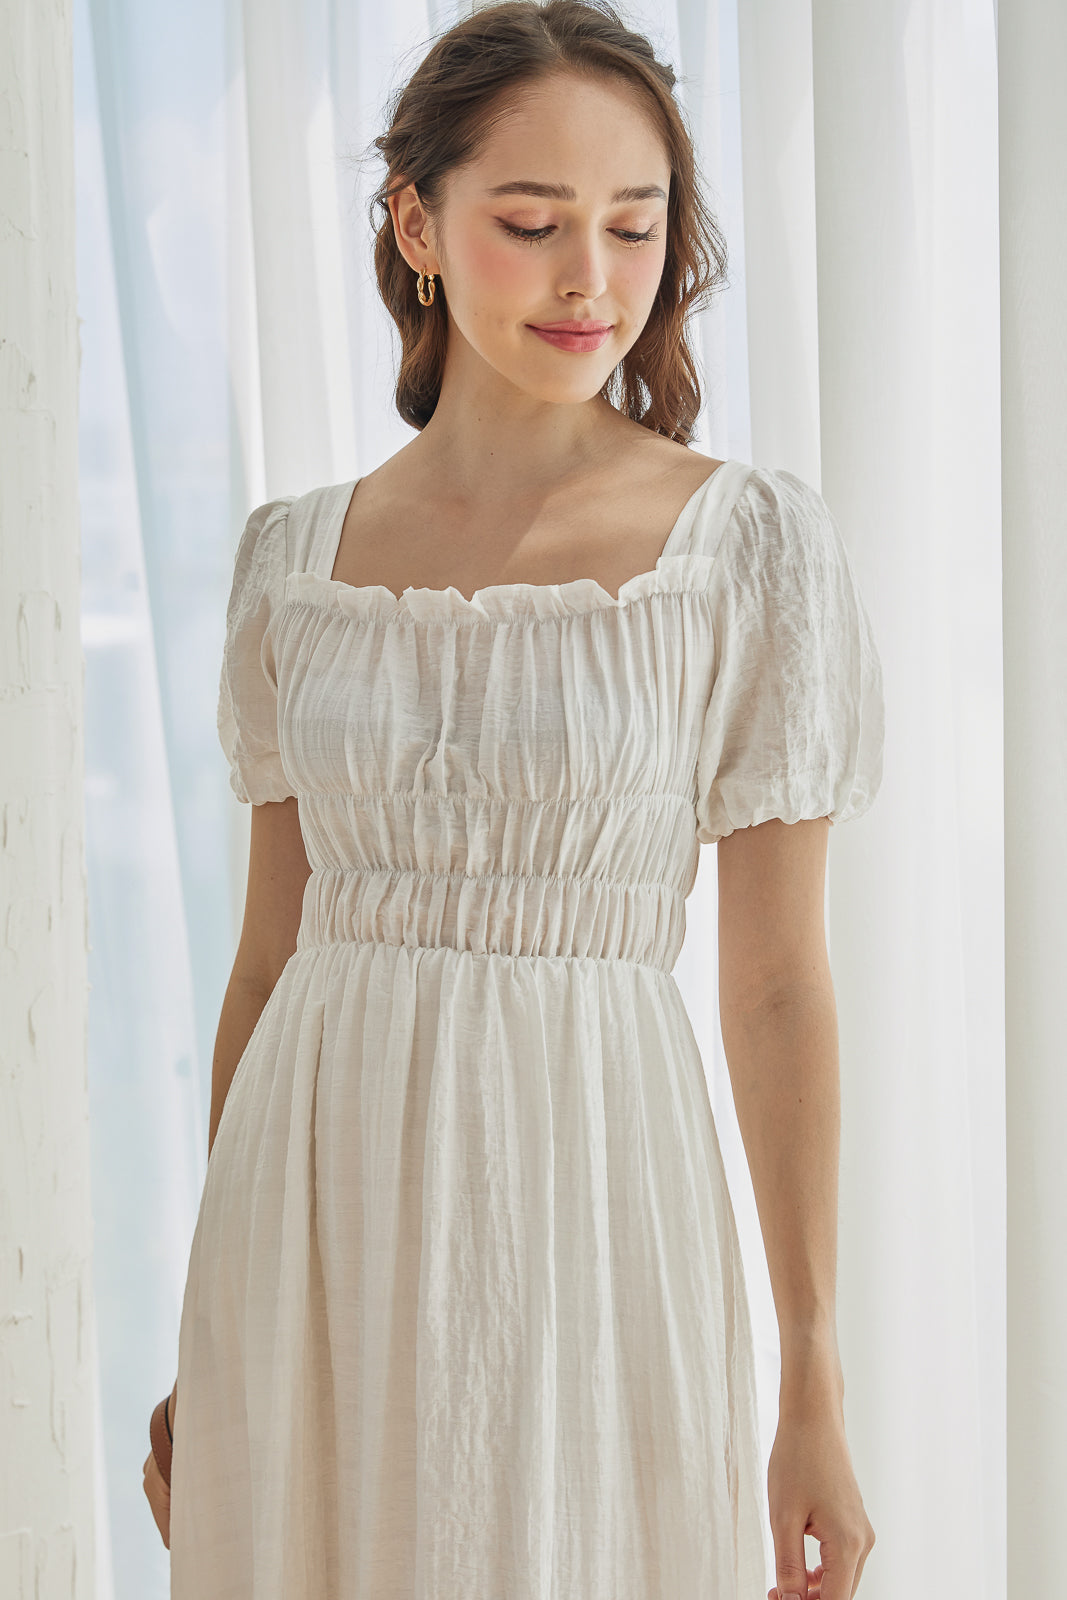 Restocked* Amelyn Smocked Dress in White